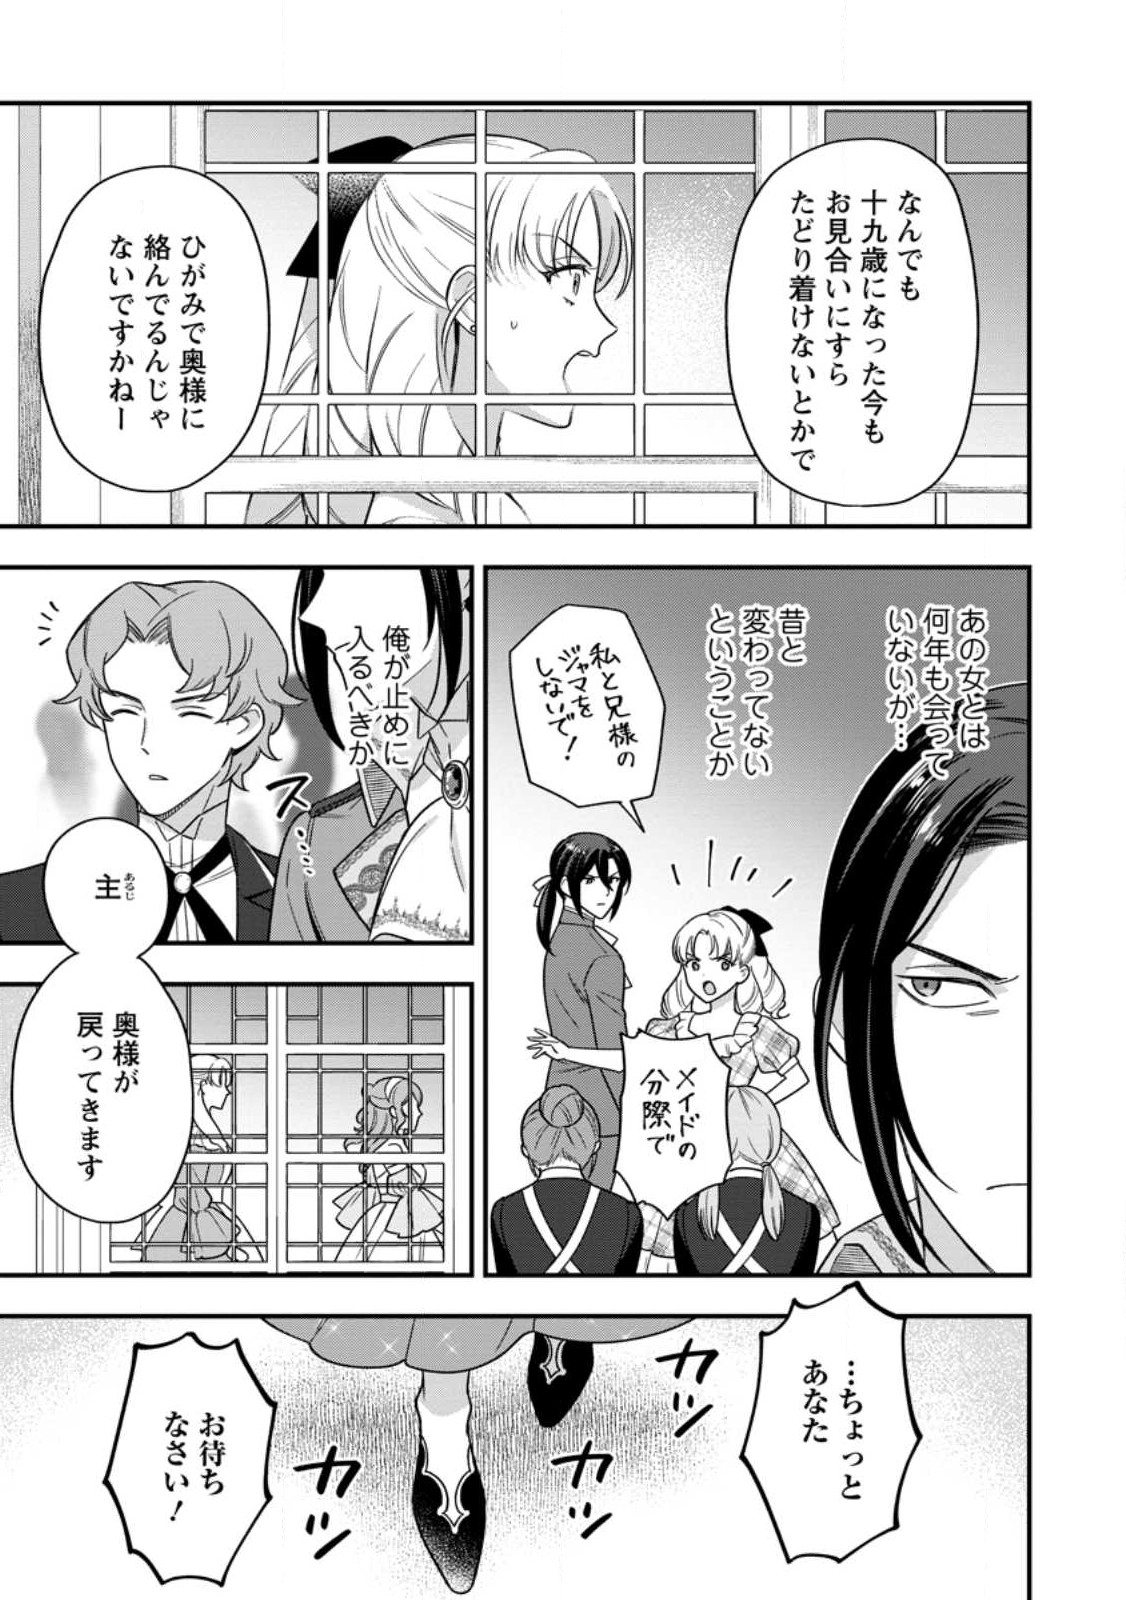 Aisanai to Iwaremashite mo - Chapter 12.1 - Page 9